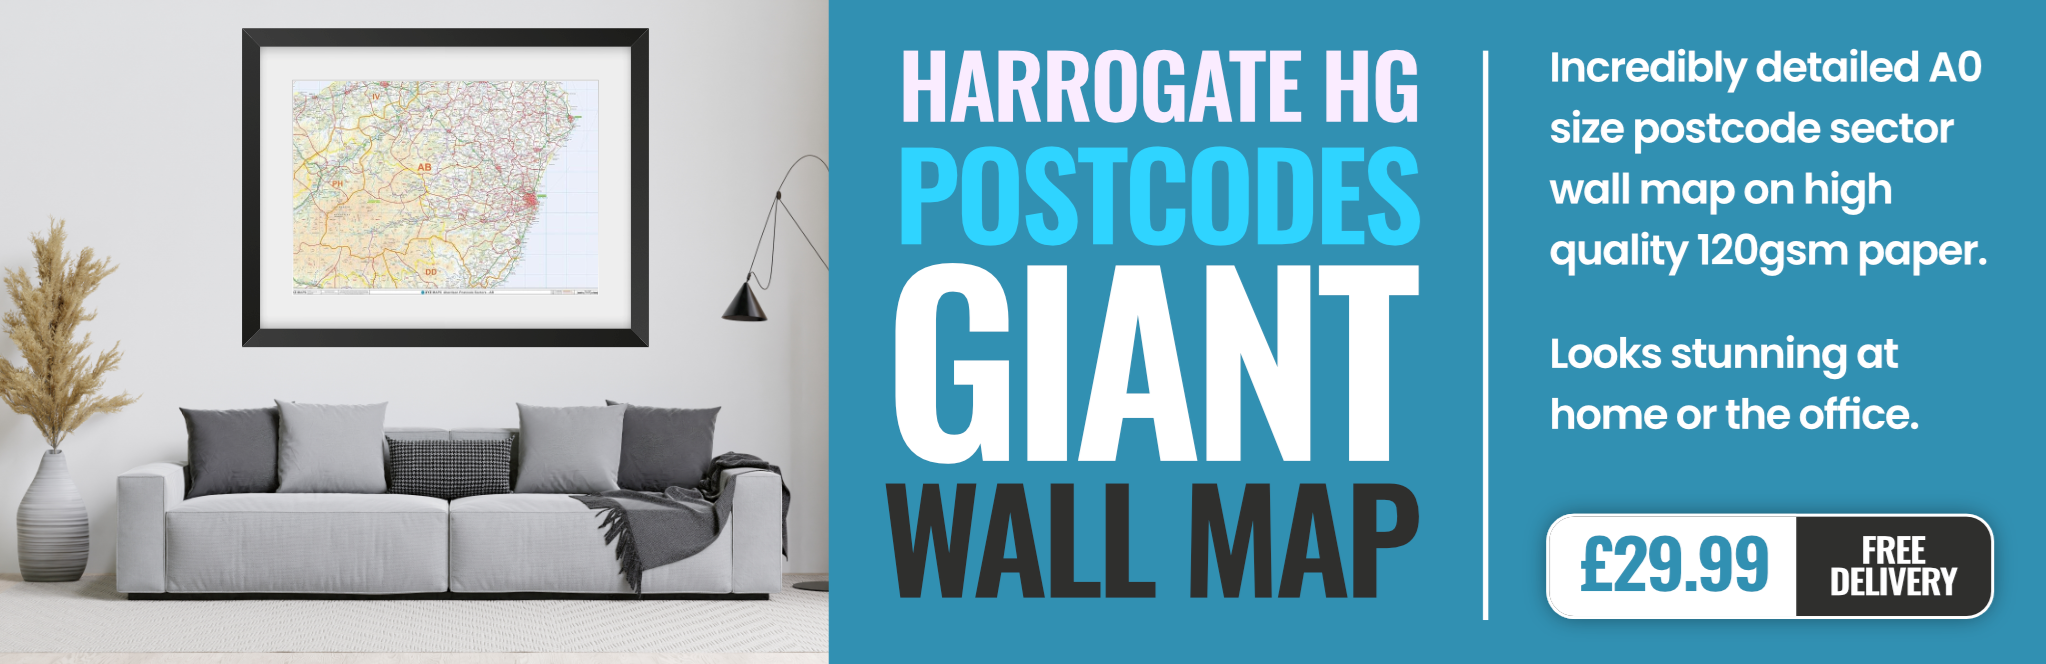 HG Postcode Wall Map